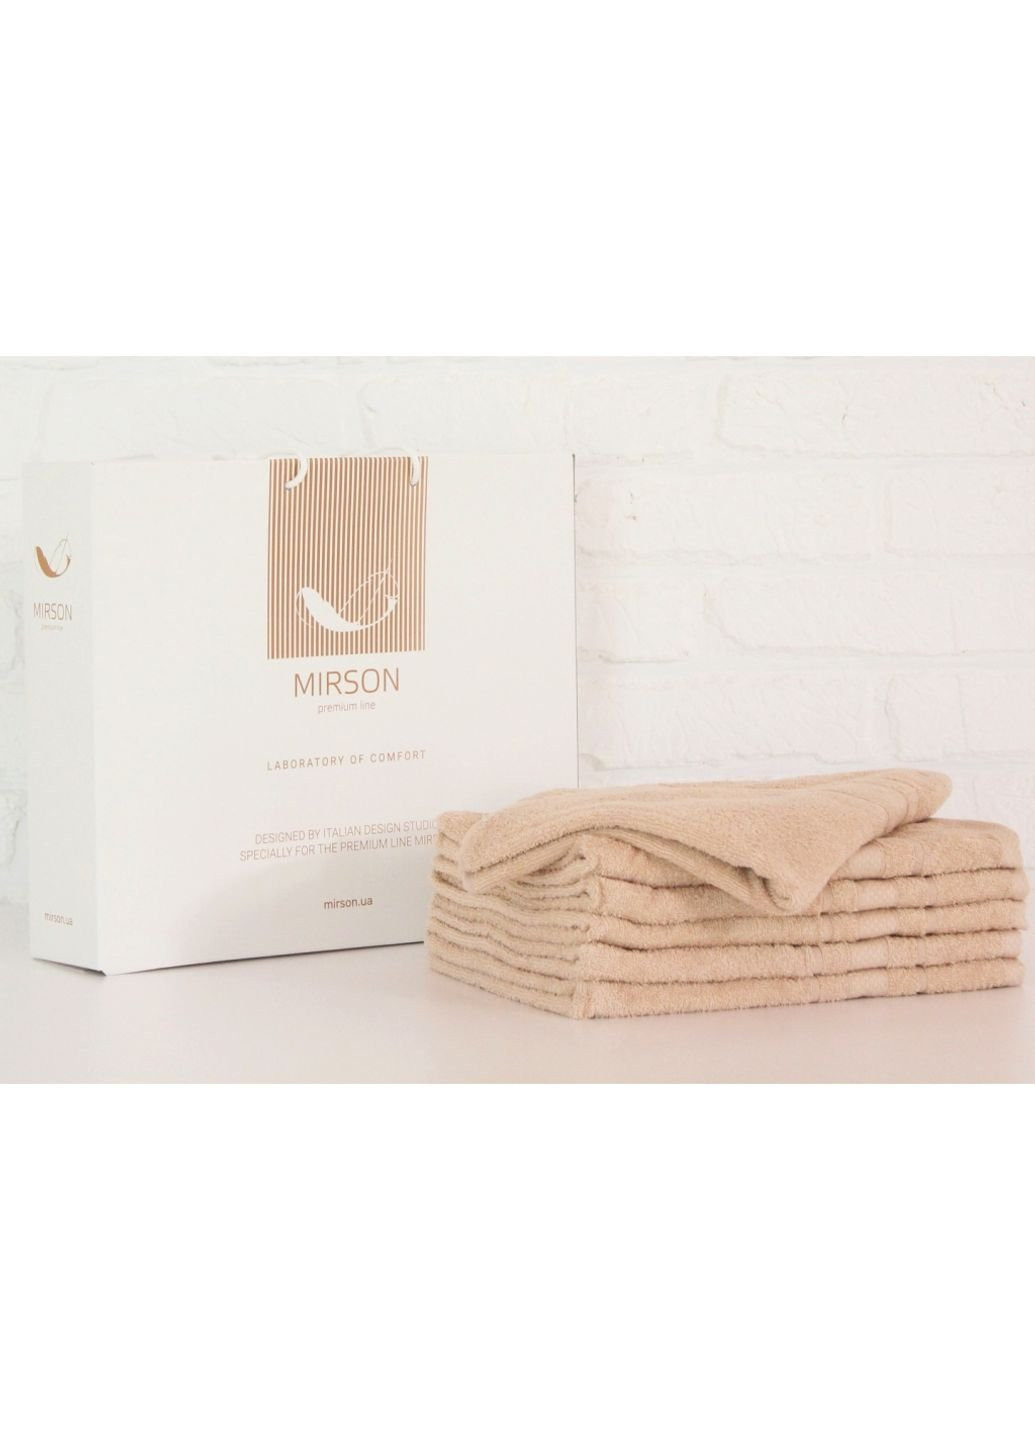 Mirson полотенце набор банных №5084 elite softness beige 70х140 6 шт (2200003524246) бежевый производство - Украина